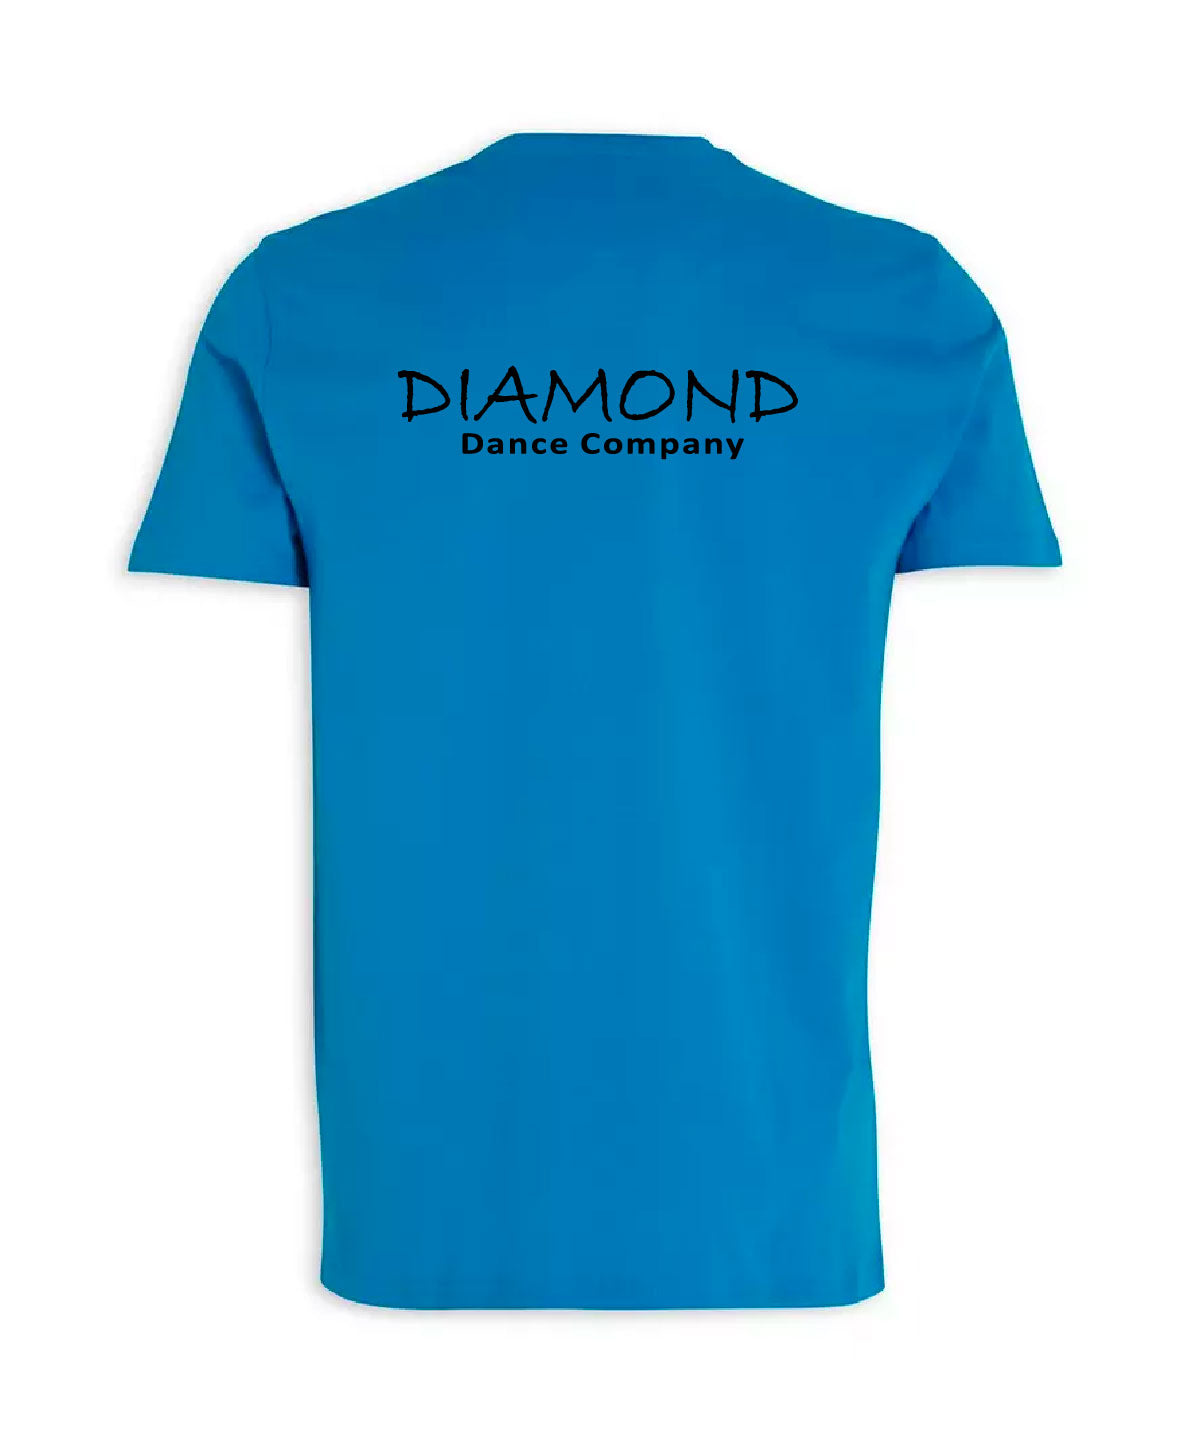 Primary Plus 1 Sapphire Kids T-Shirt - Diamond Dance